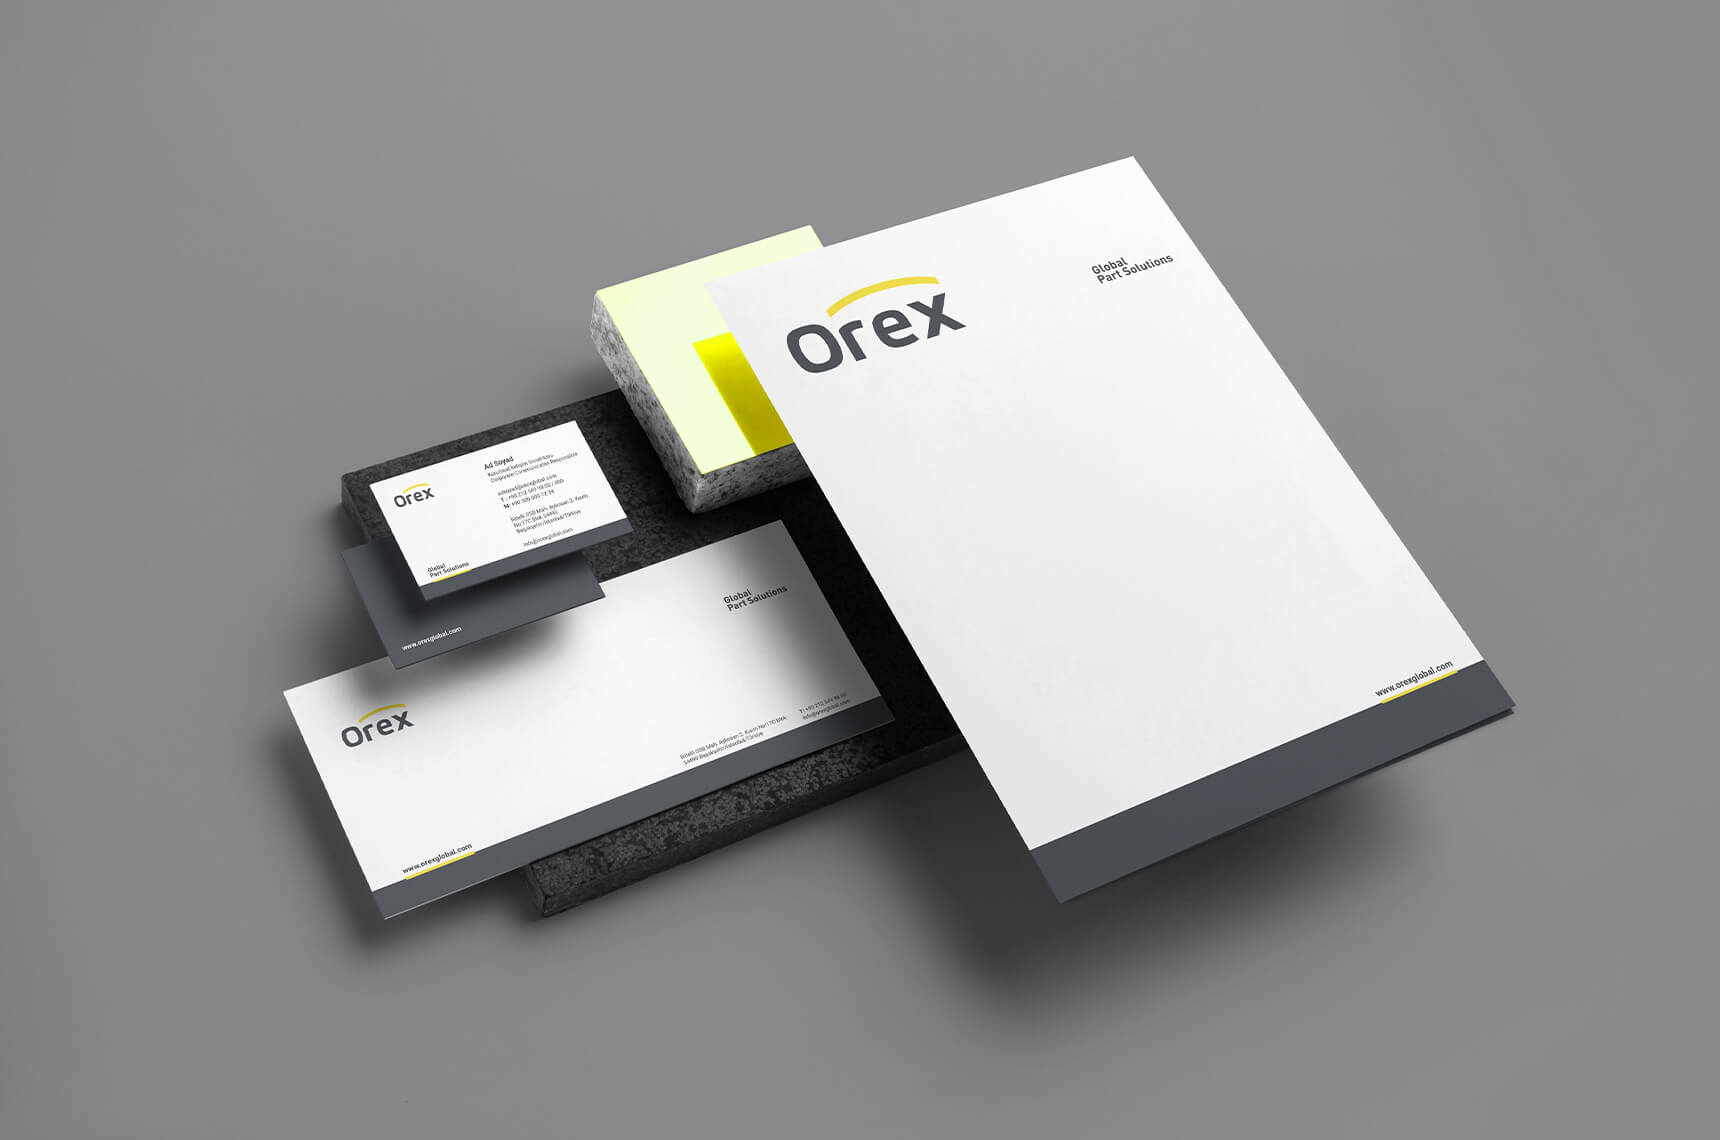 Orex-2 - wrinting 1-3 - brand video-5 - logo part-6 - brand book mockup-7 - brand type-9 - color part-10 - favicon-12 - favicon writing-13 - mockup-1-14 - mockup-2